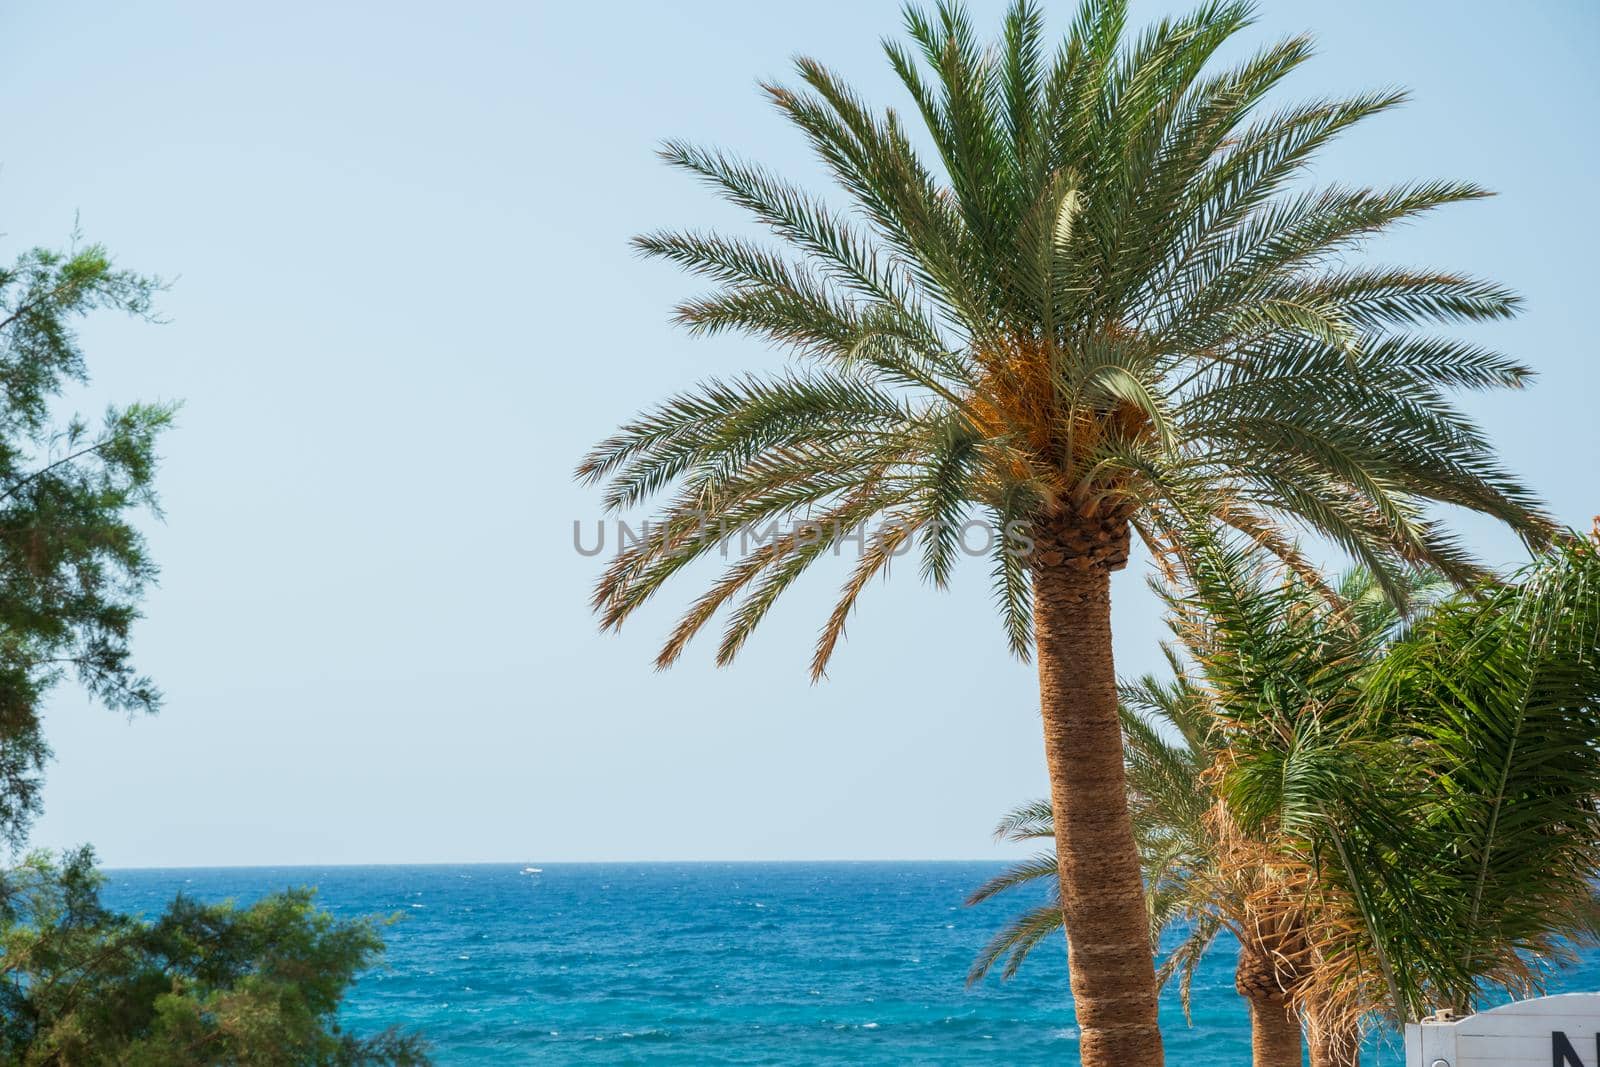 Beautiful shot of palm trees near a beach